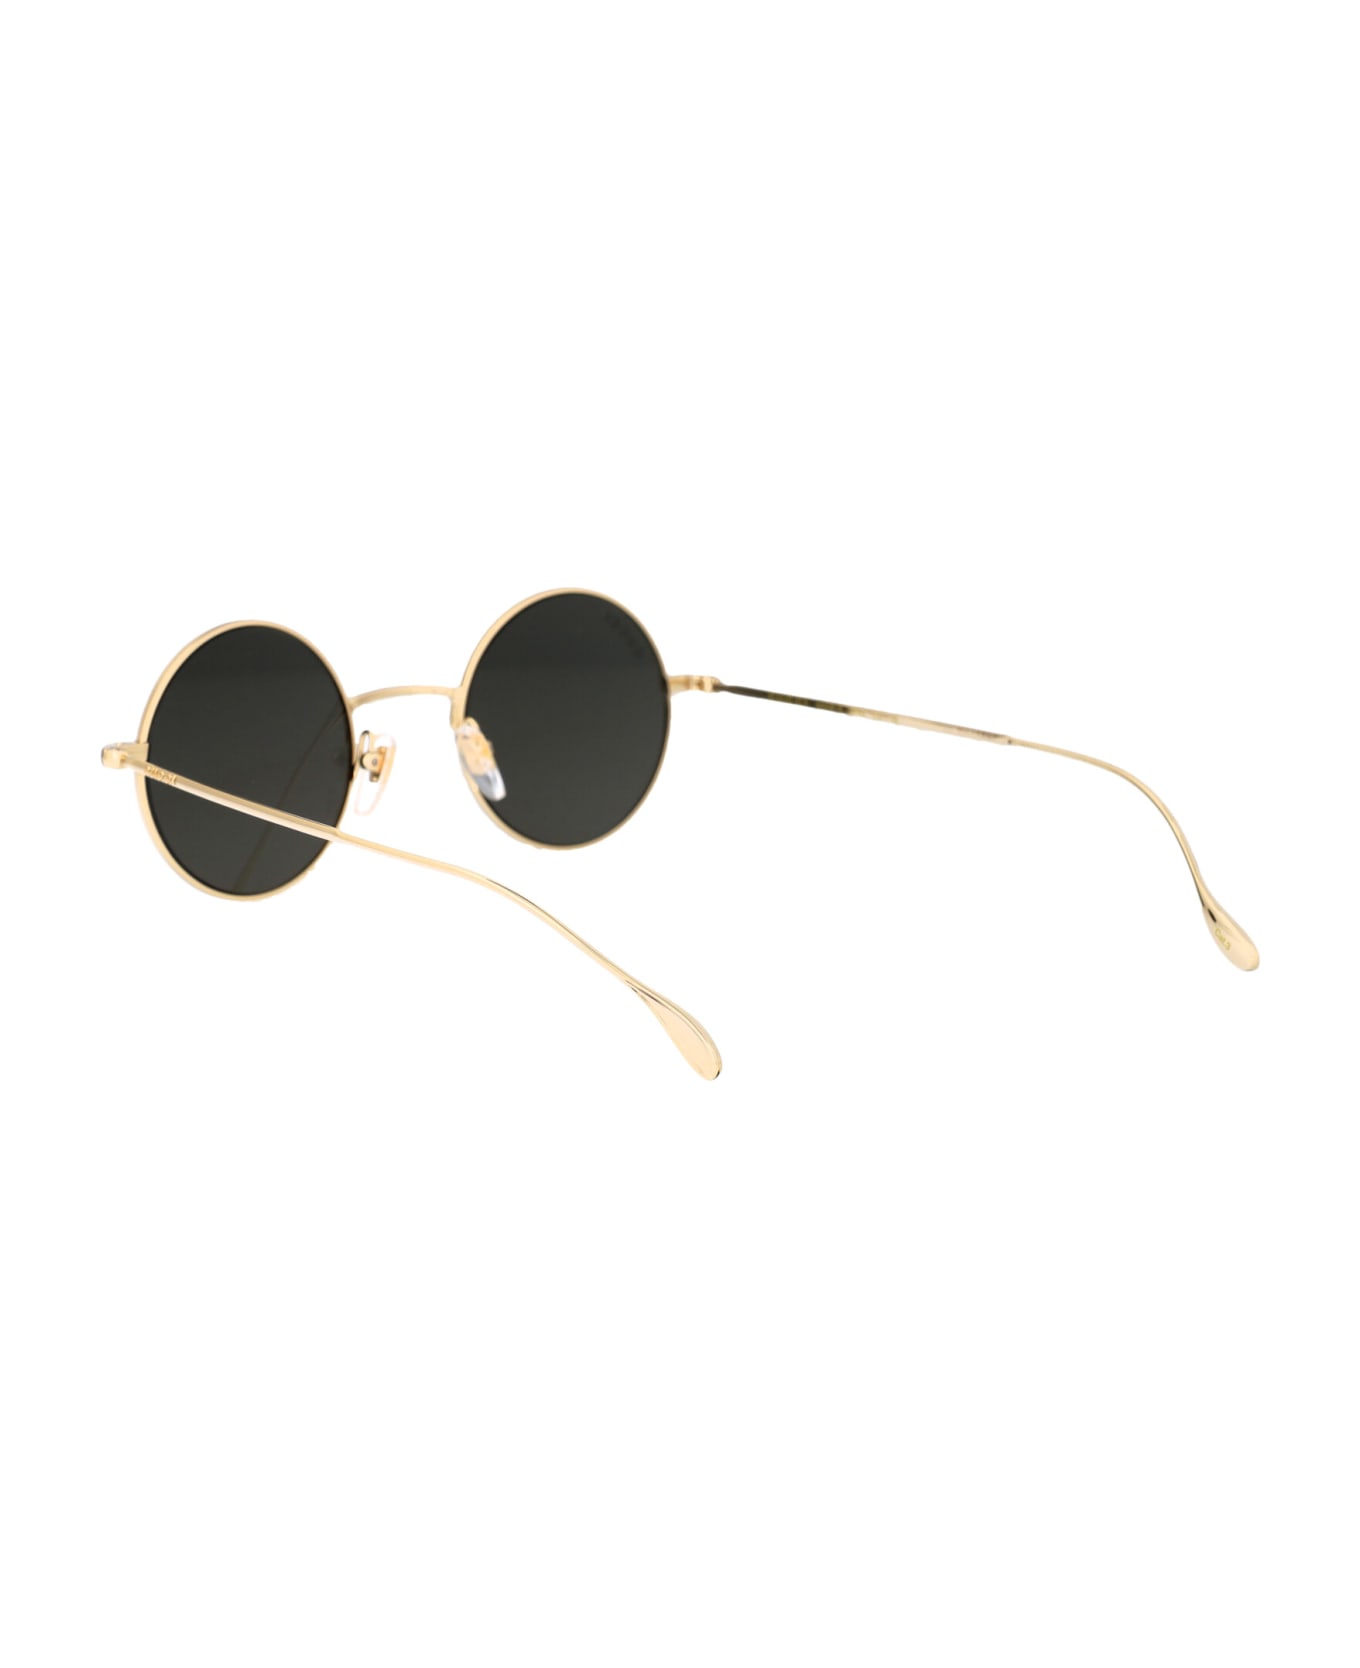 Gucci Eyewear Gg1649s Sunglasses - 007 GOLD GOLD GREY サングラス